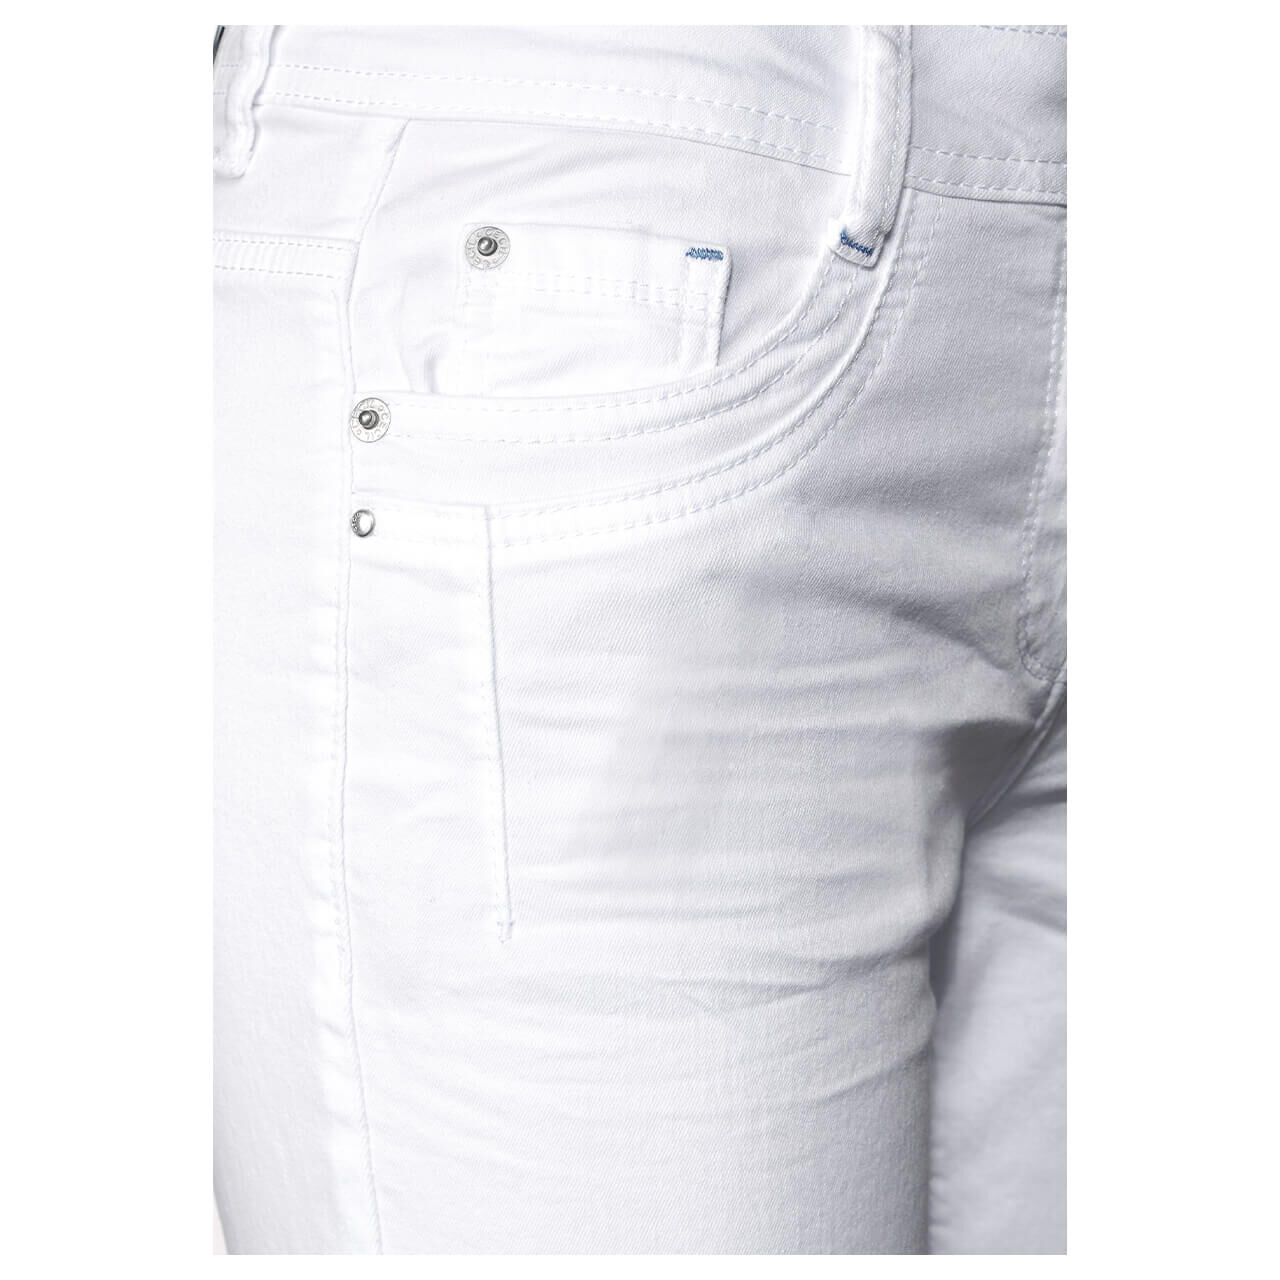 Cecil Scarlett 7/8 Jeans white